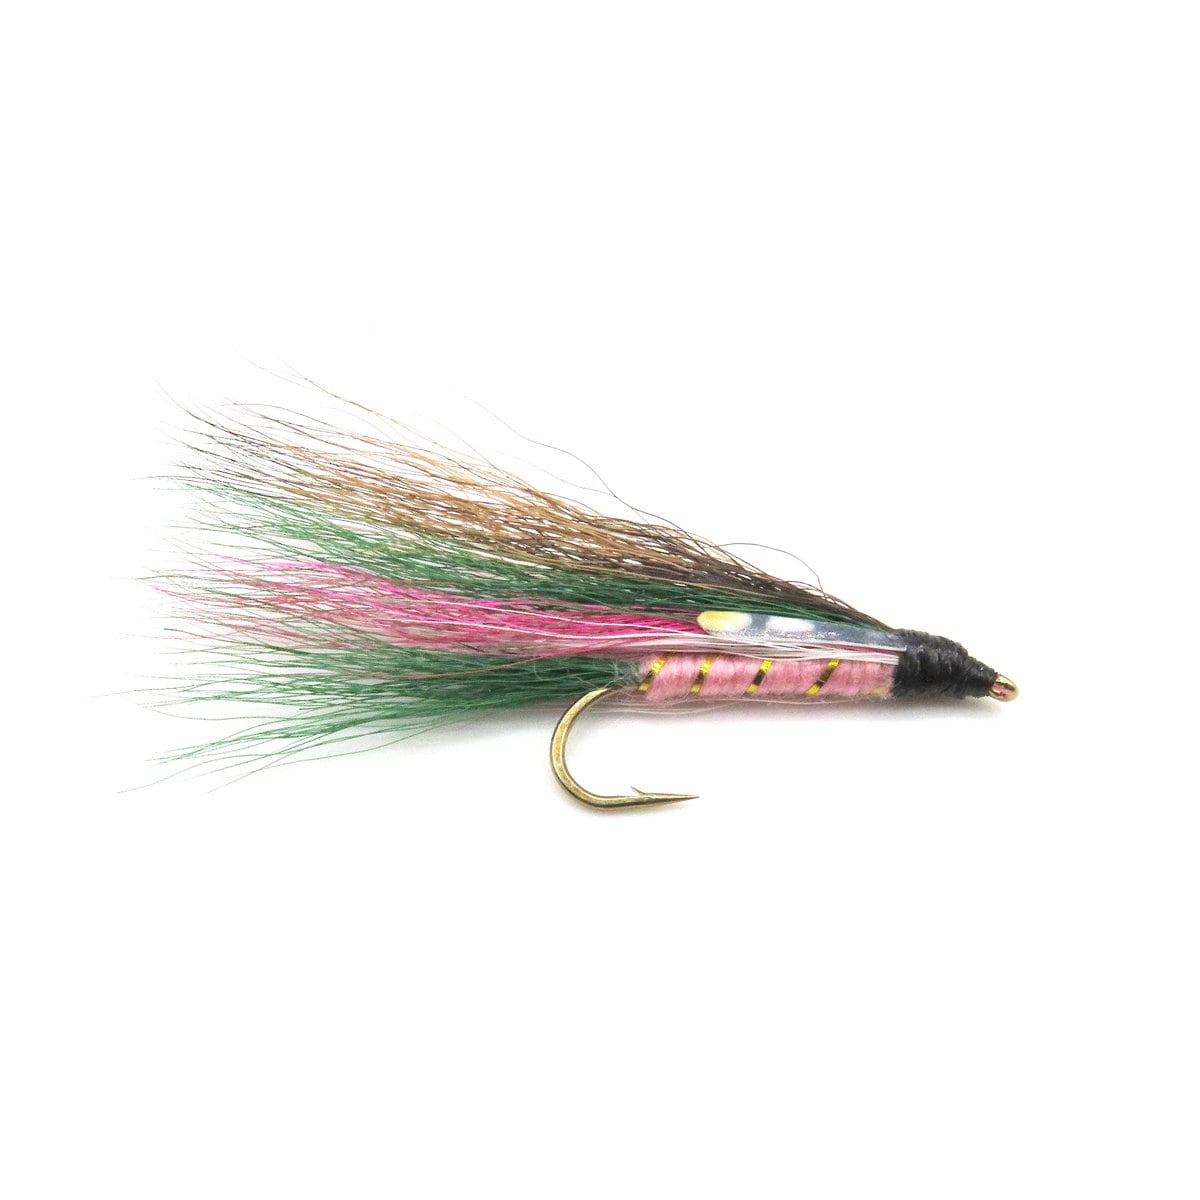 Little Rainbow Trout Streamer - Streamer Flies for Trout - Fly Fishing  Trout Flies for Fly Boxes